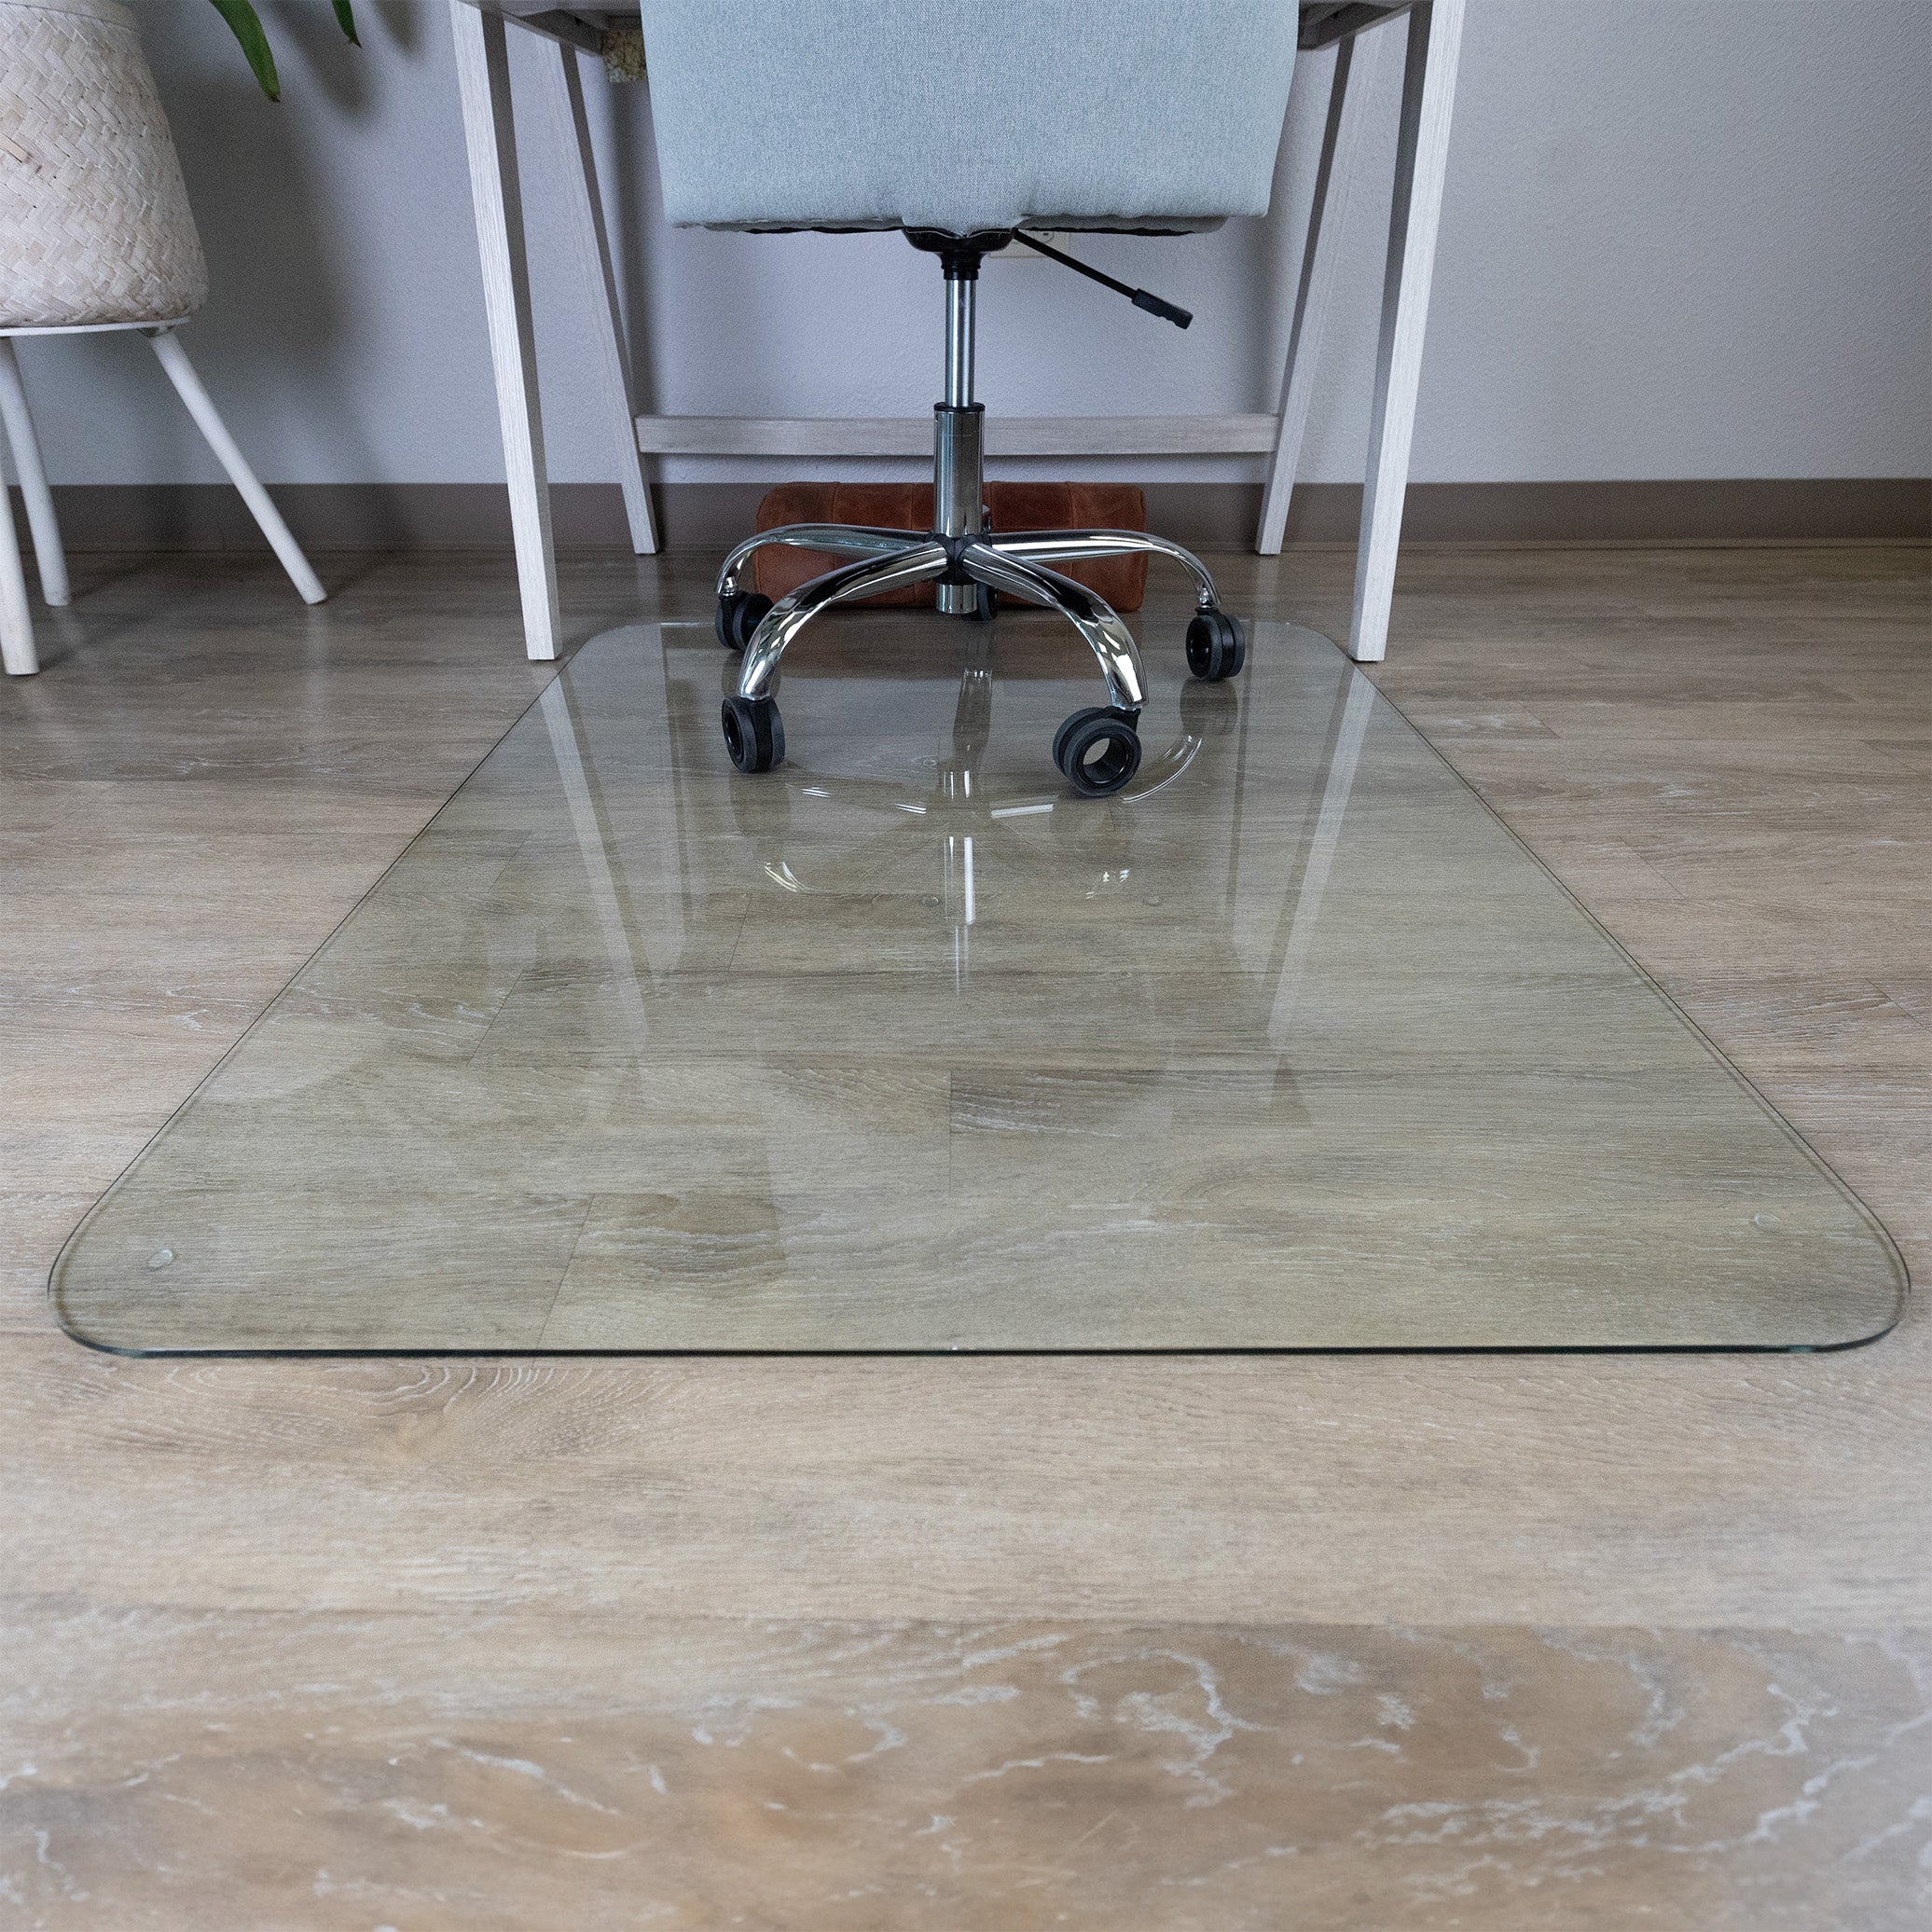 Glass Chair Mats vs Plastic Chair Mats for Carpet & Wood Floors